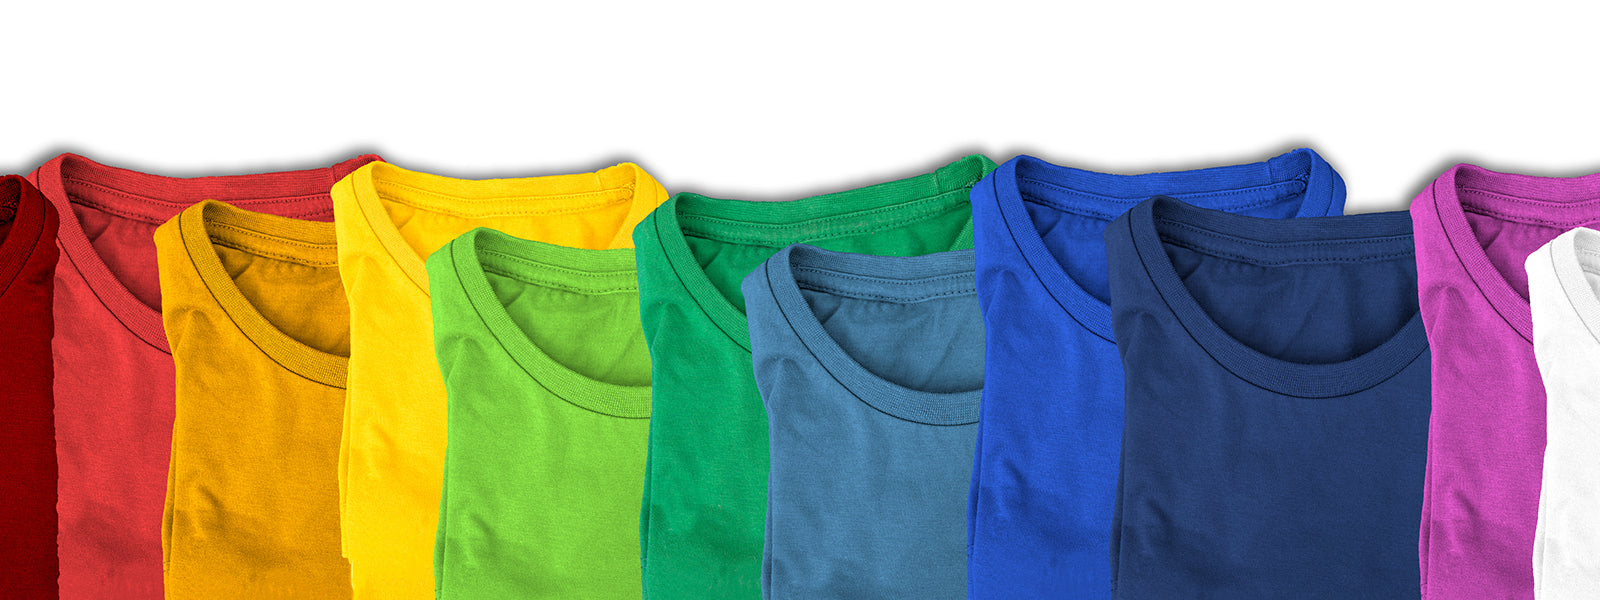 Customizable Eco-friendly Shirts.